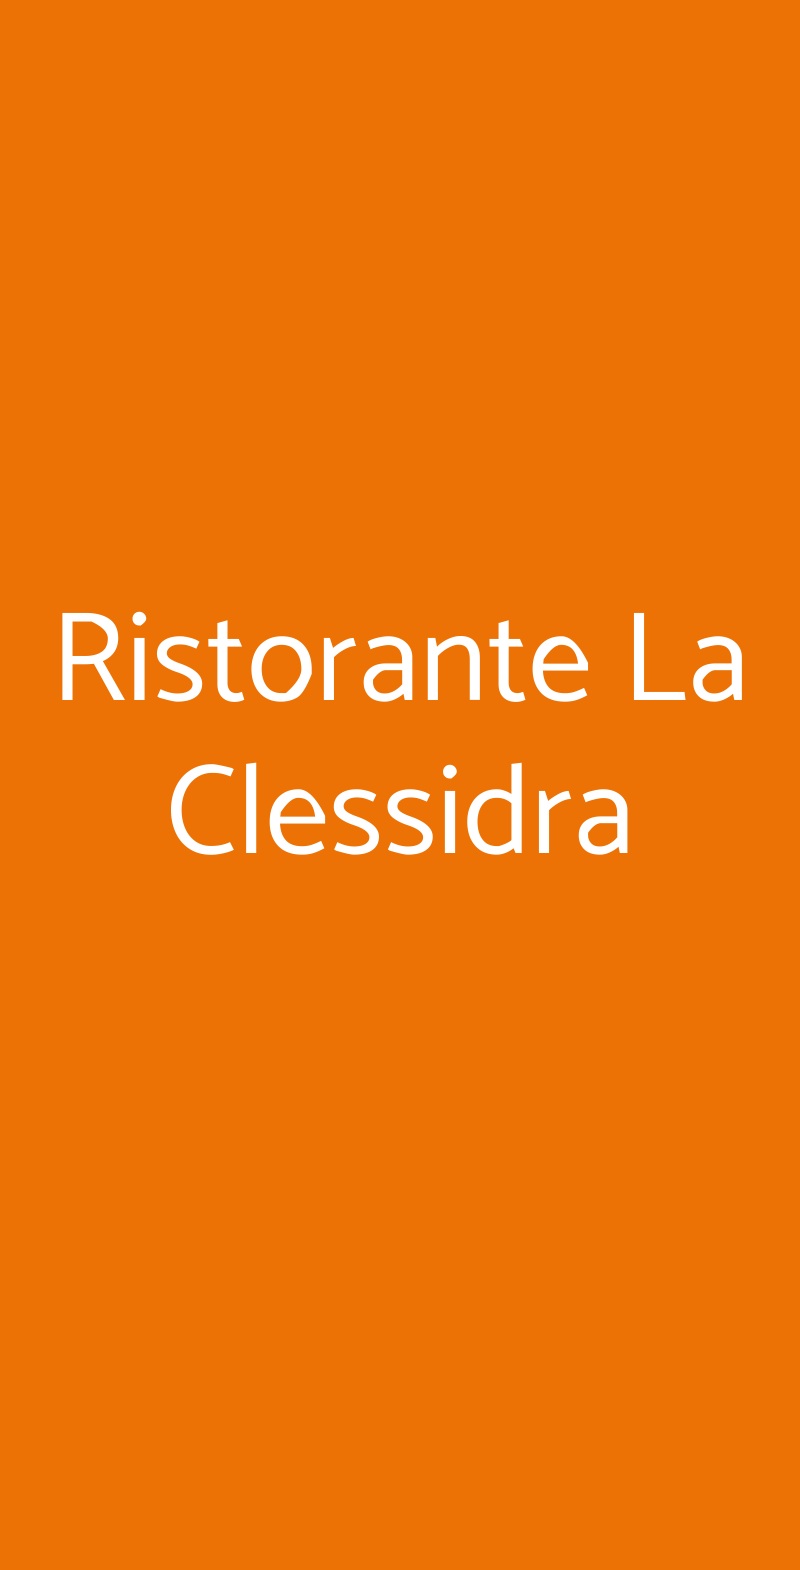 Ristorante La Clessidra Pisa menù 1 pagina